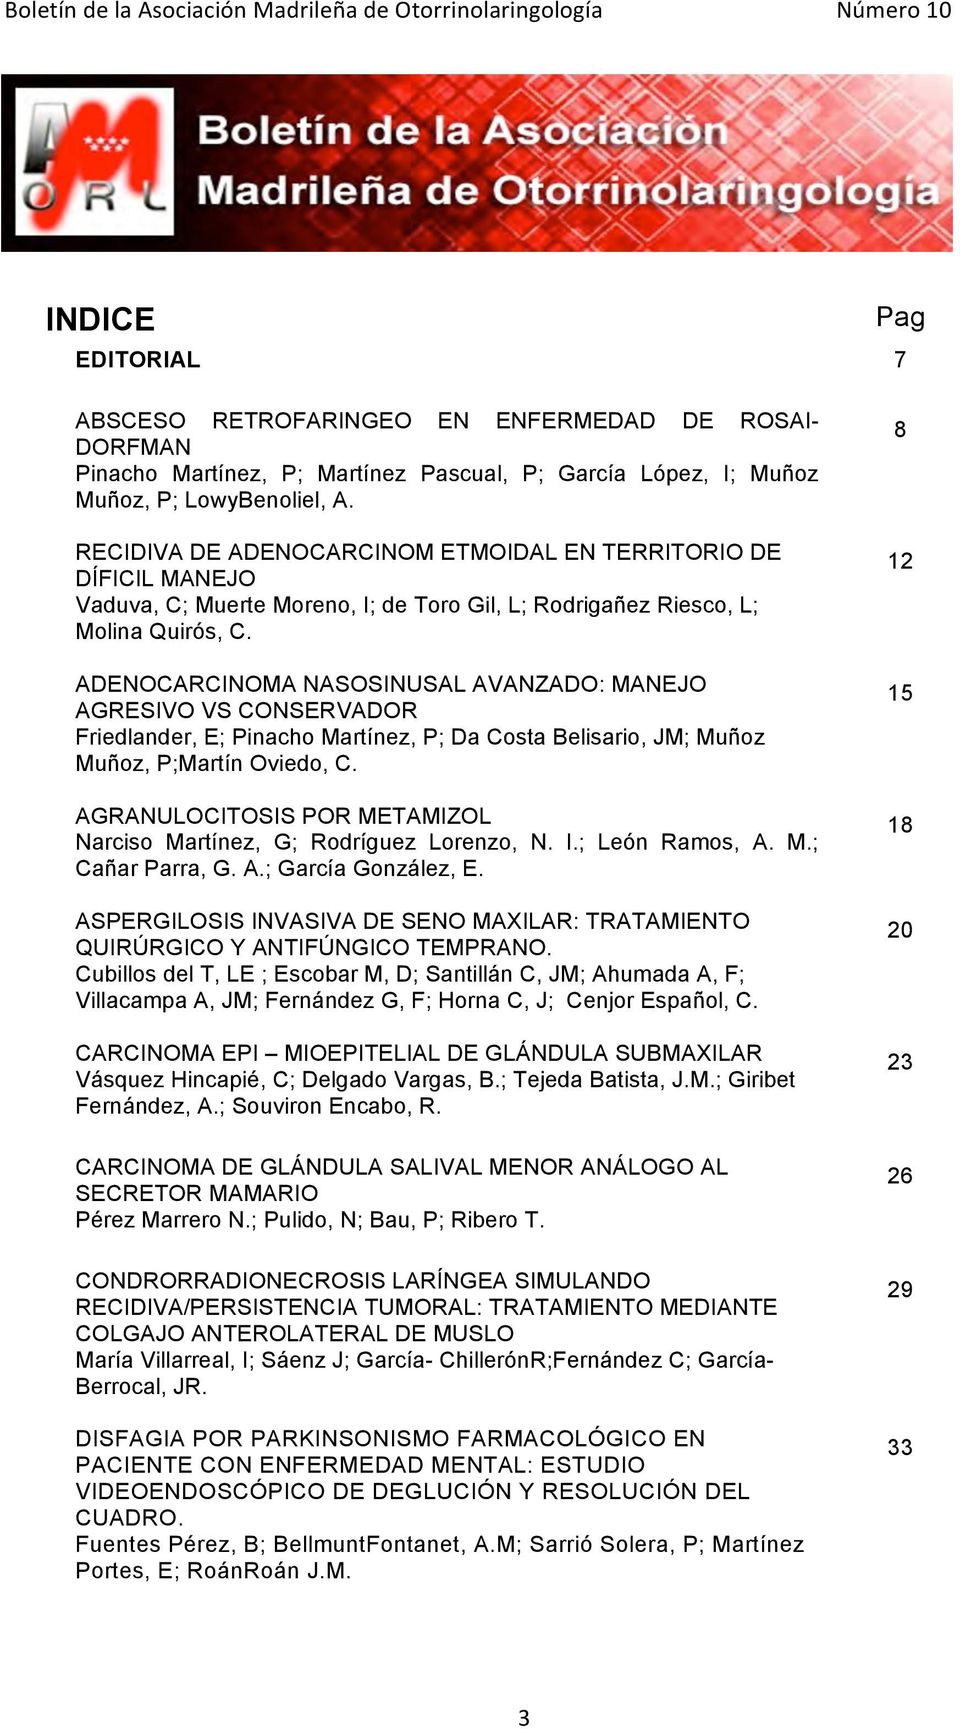 ADENOCARCINOMA NASOSINUSAL AVANZADO: MANEJO AGRESIVO VS CONSERVADOR Friedlander, E; Pinacho Martínez, P; Da Costa Belisario, JM; Muñoz Muñoz, P;Martín Oviedo, C.